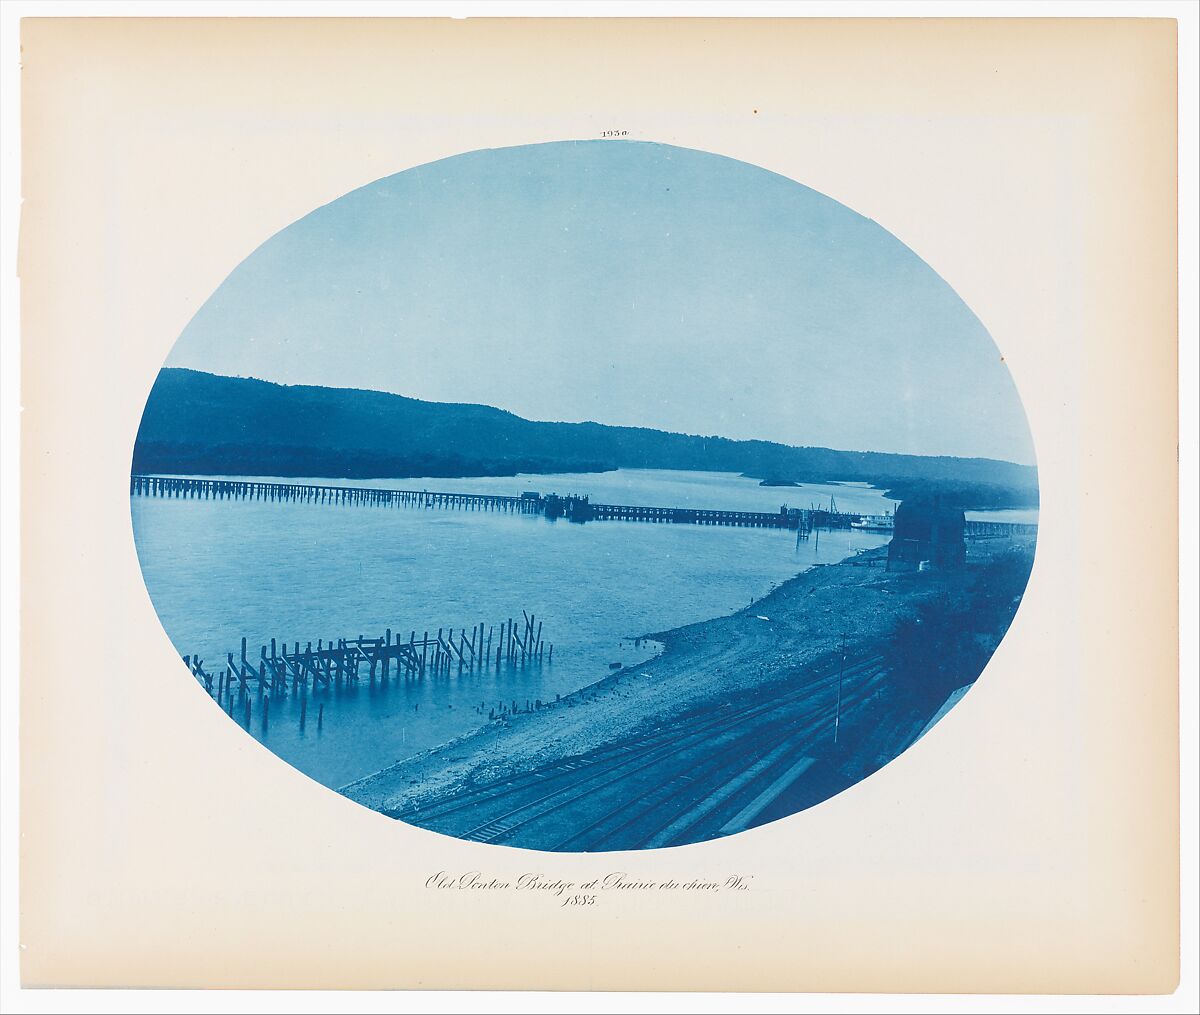 No. 193a. Old Ponton Bridge at Prairie du chien, Wisconsin, Henry P. Bosse  American, born Germany, Cyanotype